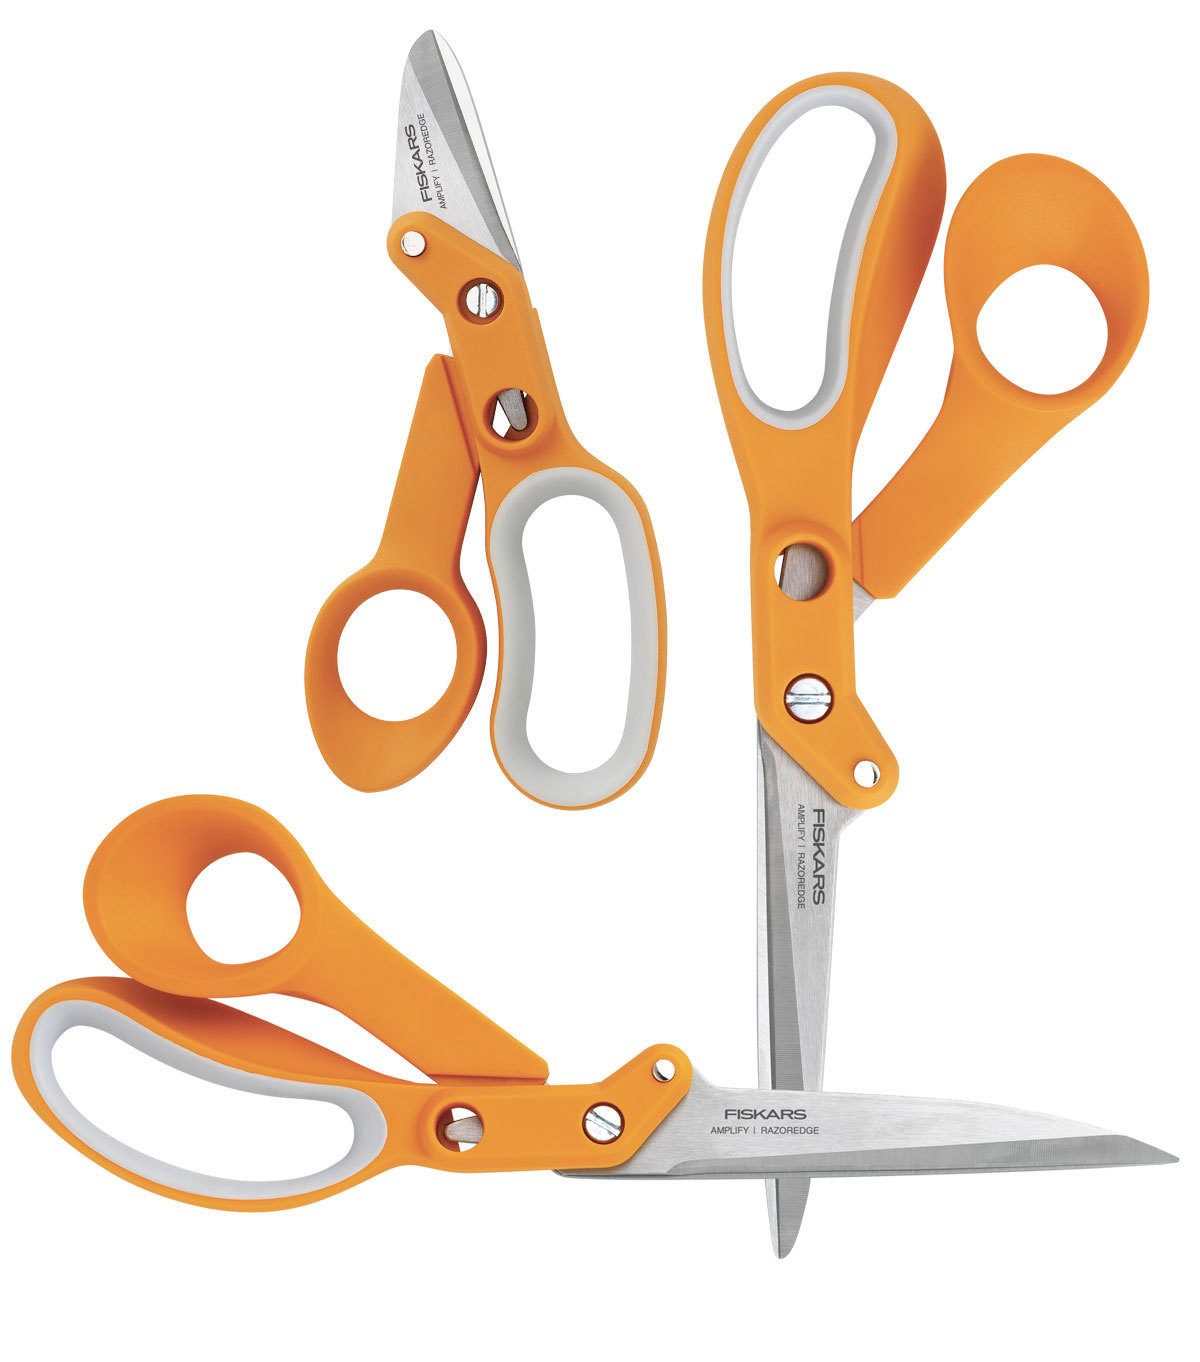 The Extraordinary Evolution Of Scissors